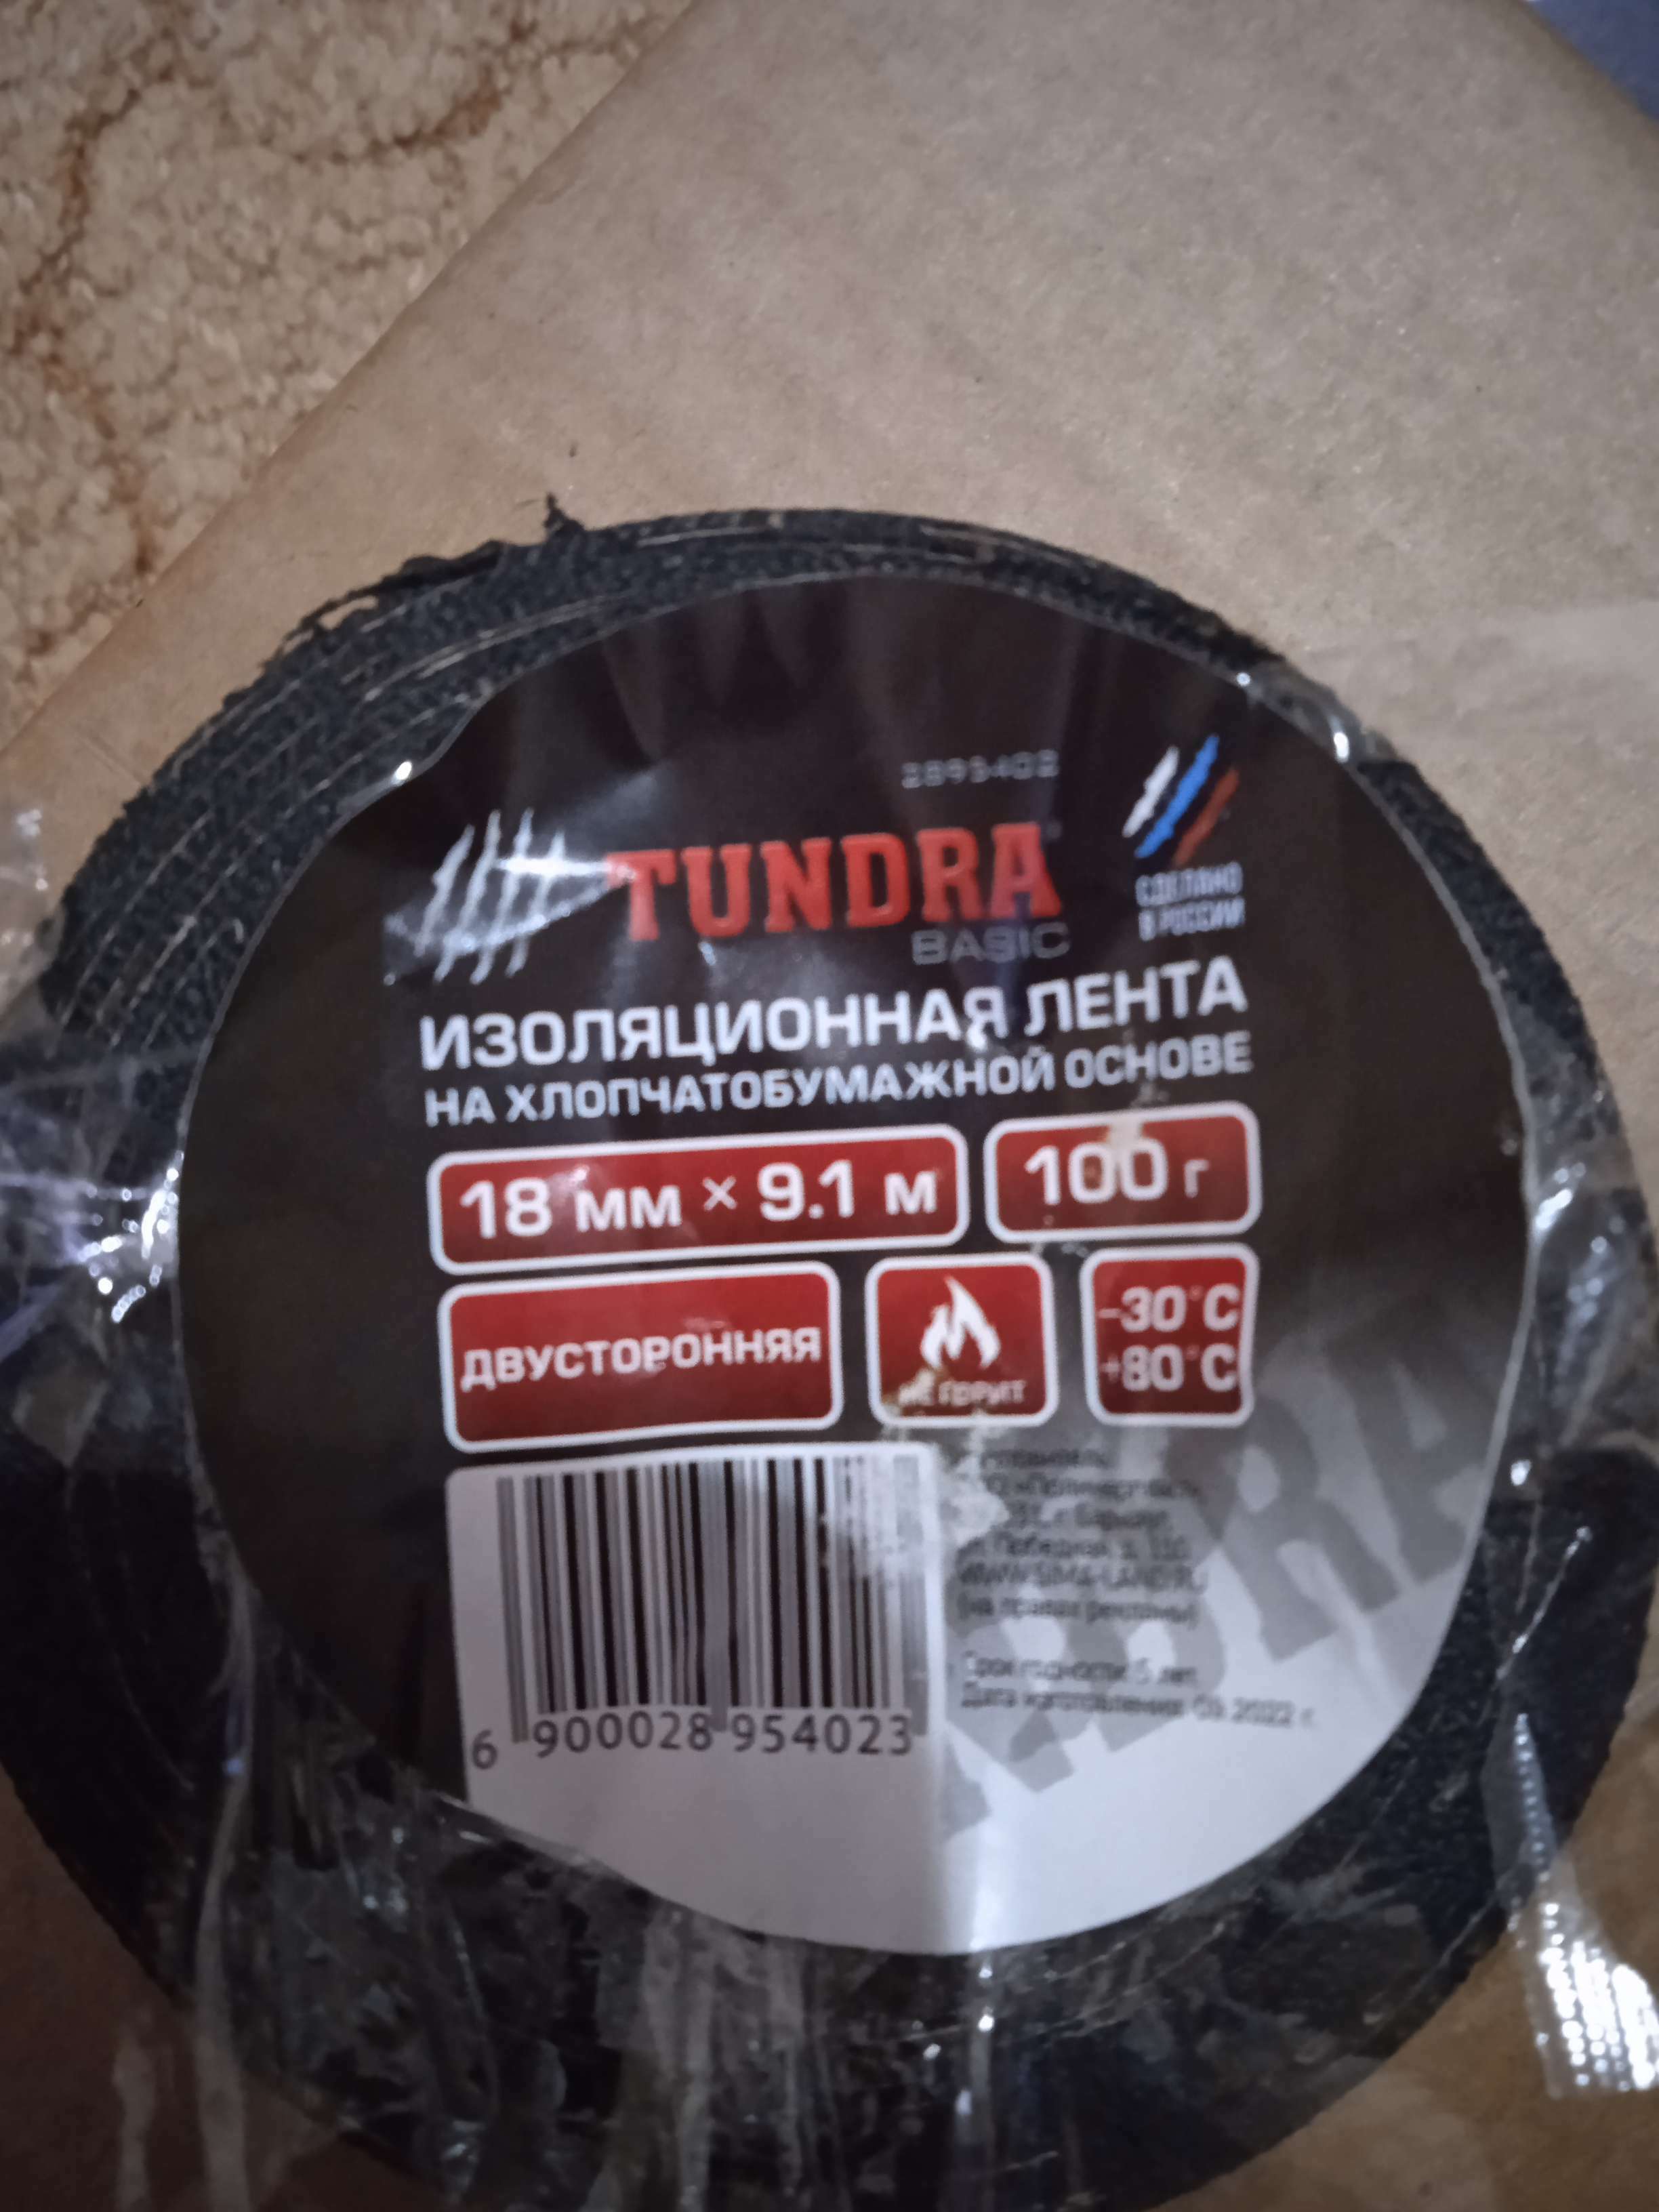 Фотография покупателя товара Изолента TUNDRA, ХБ, 100 гр, 18 мм х 9.1 м, двусторонняя, обычной липкости - Фото 1